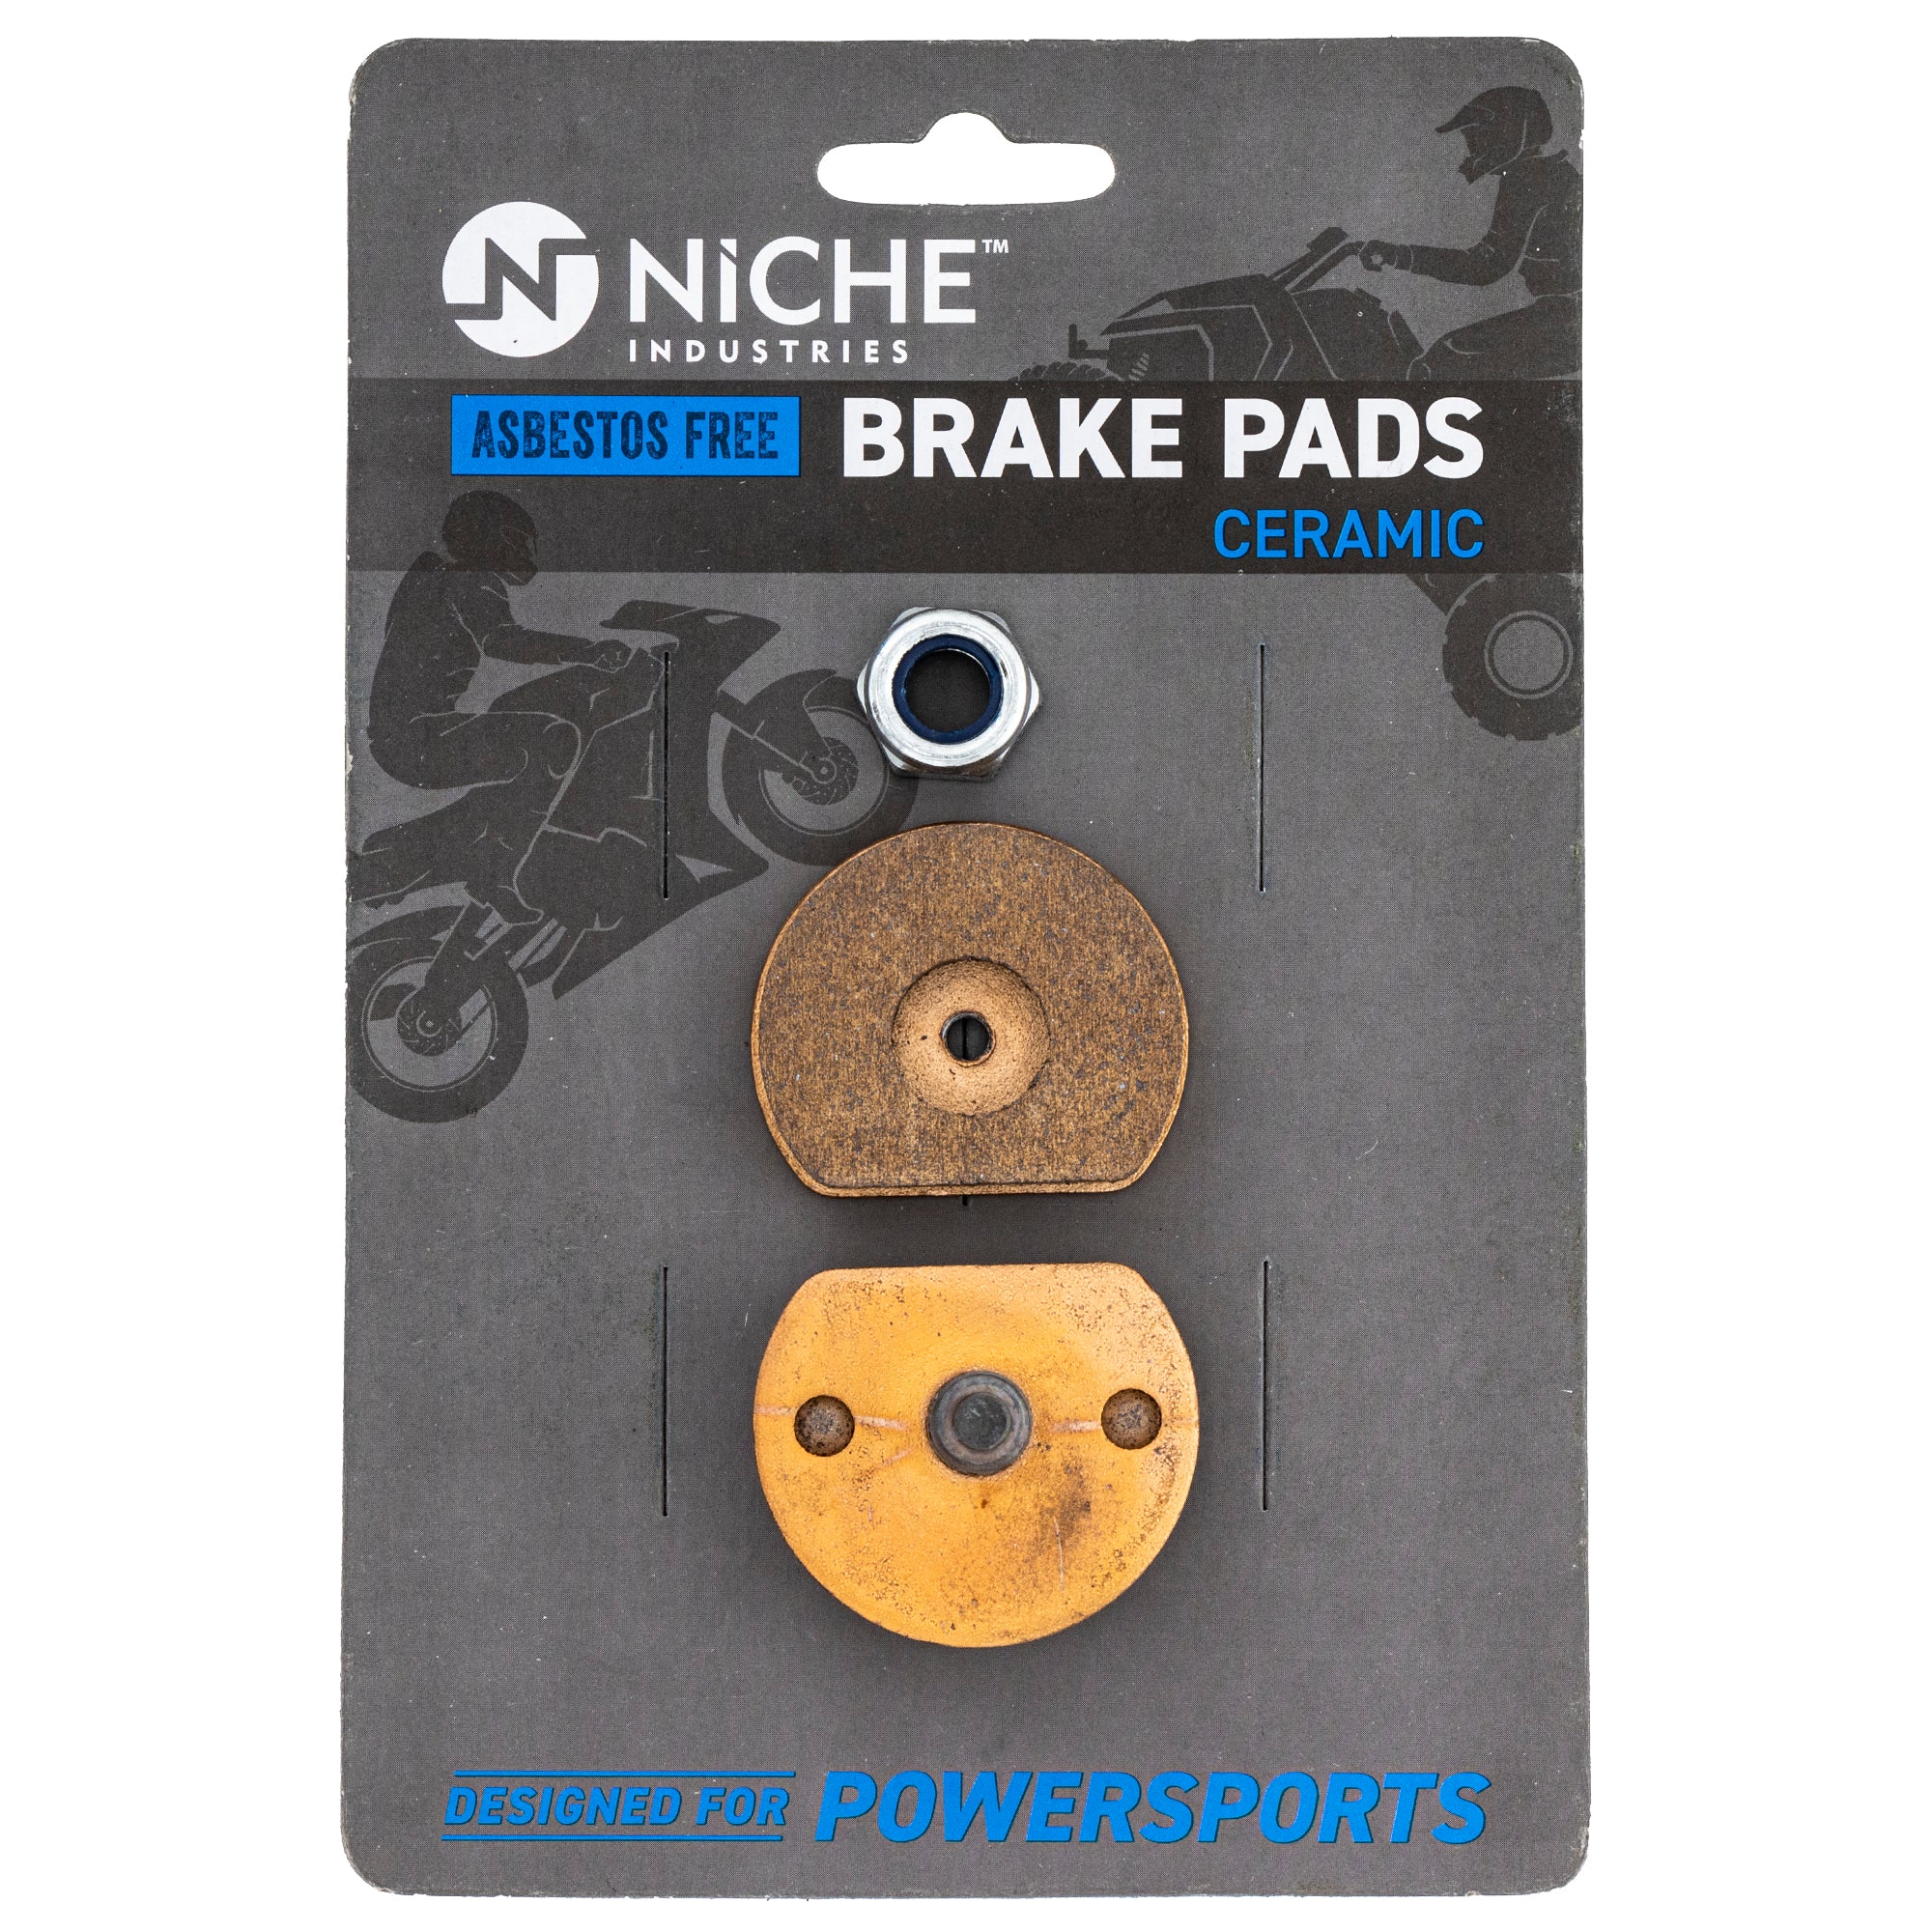 NICHE Ceramic Brake Pad Kit 860700700 860700100 860 700